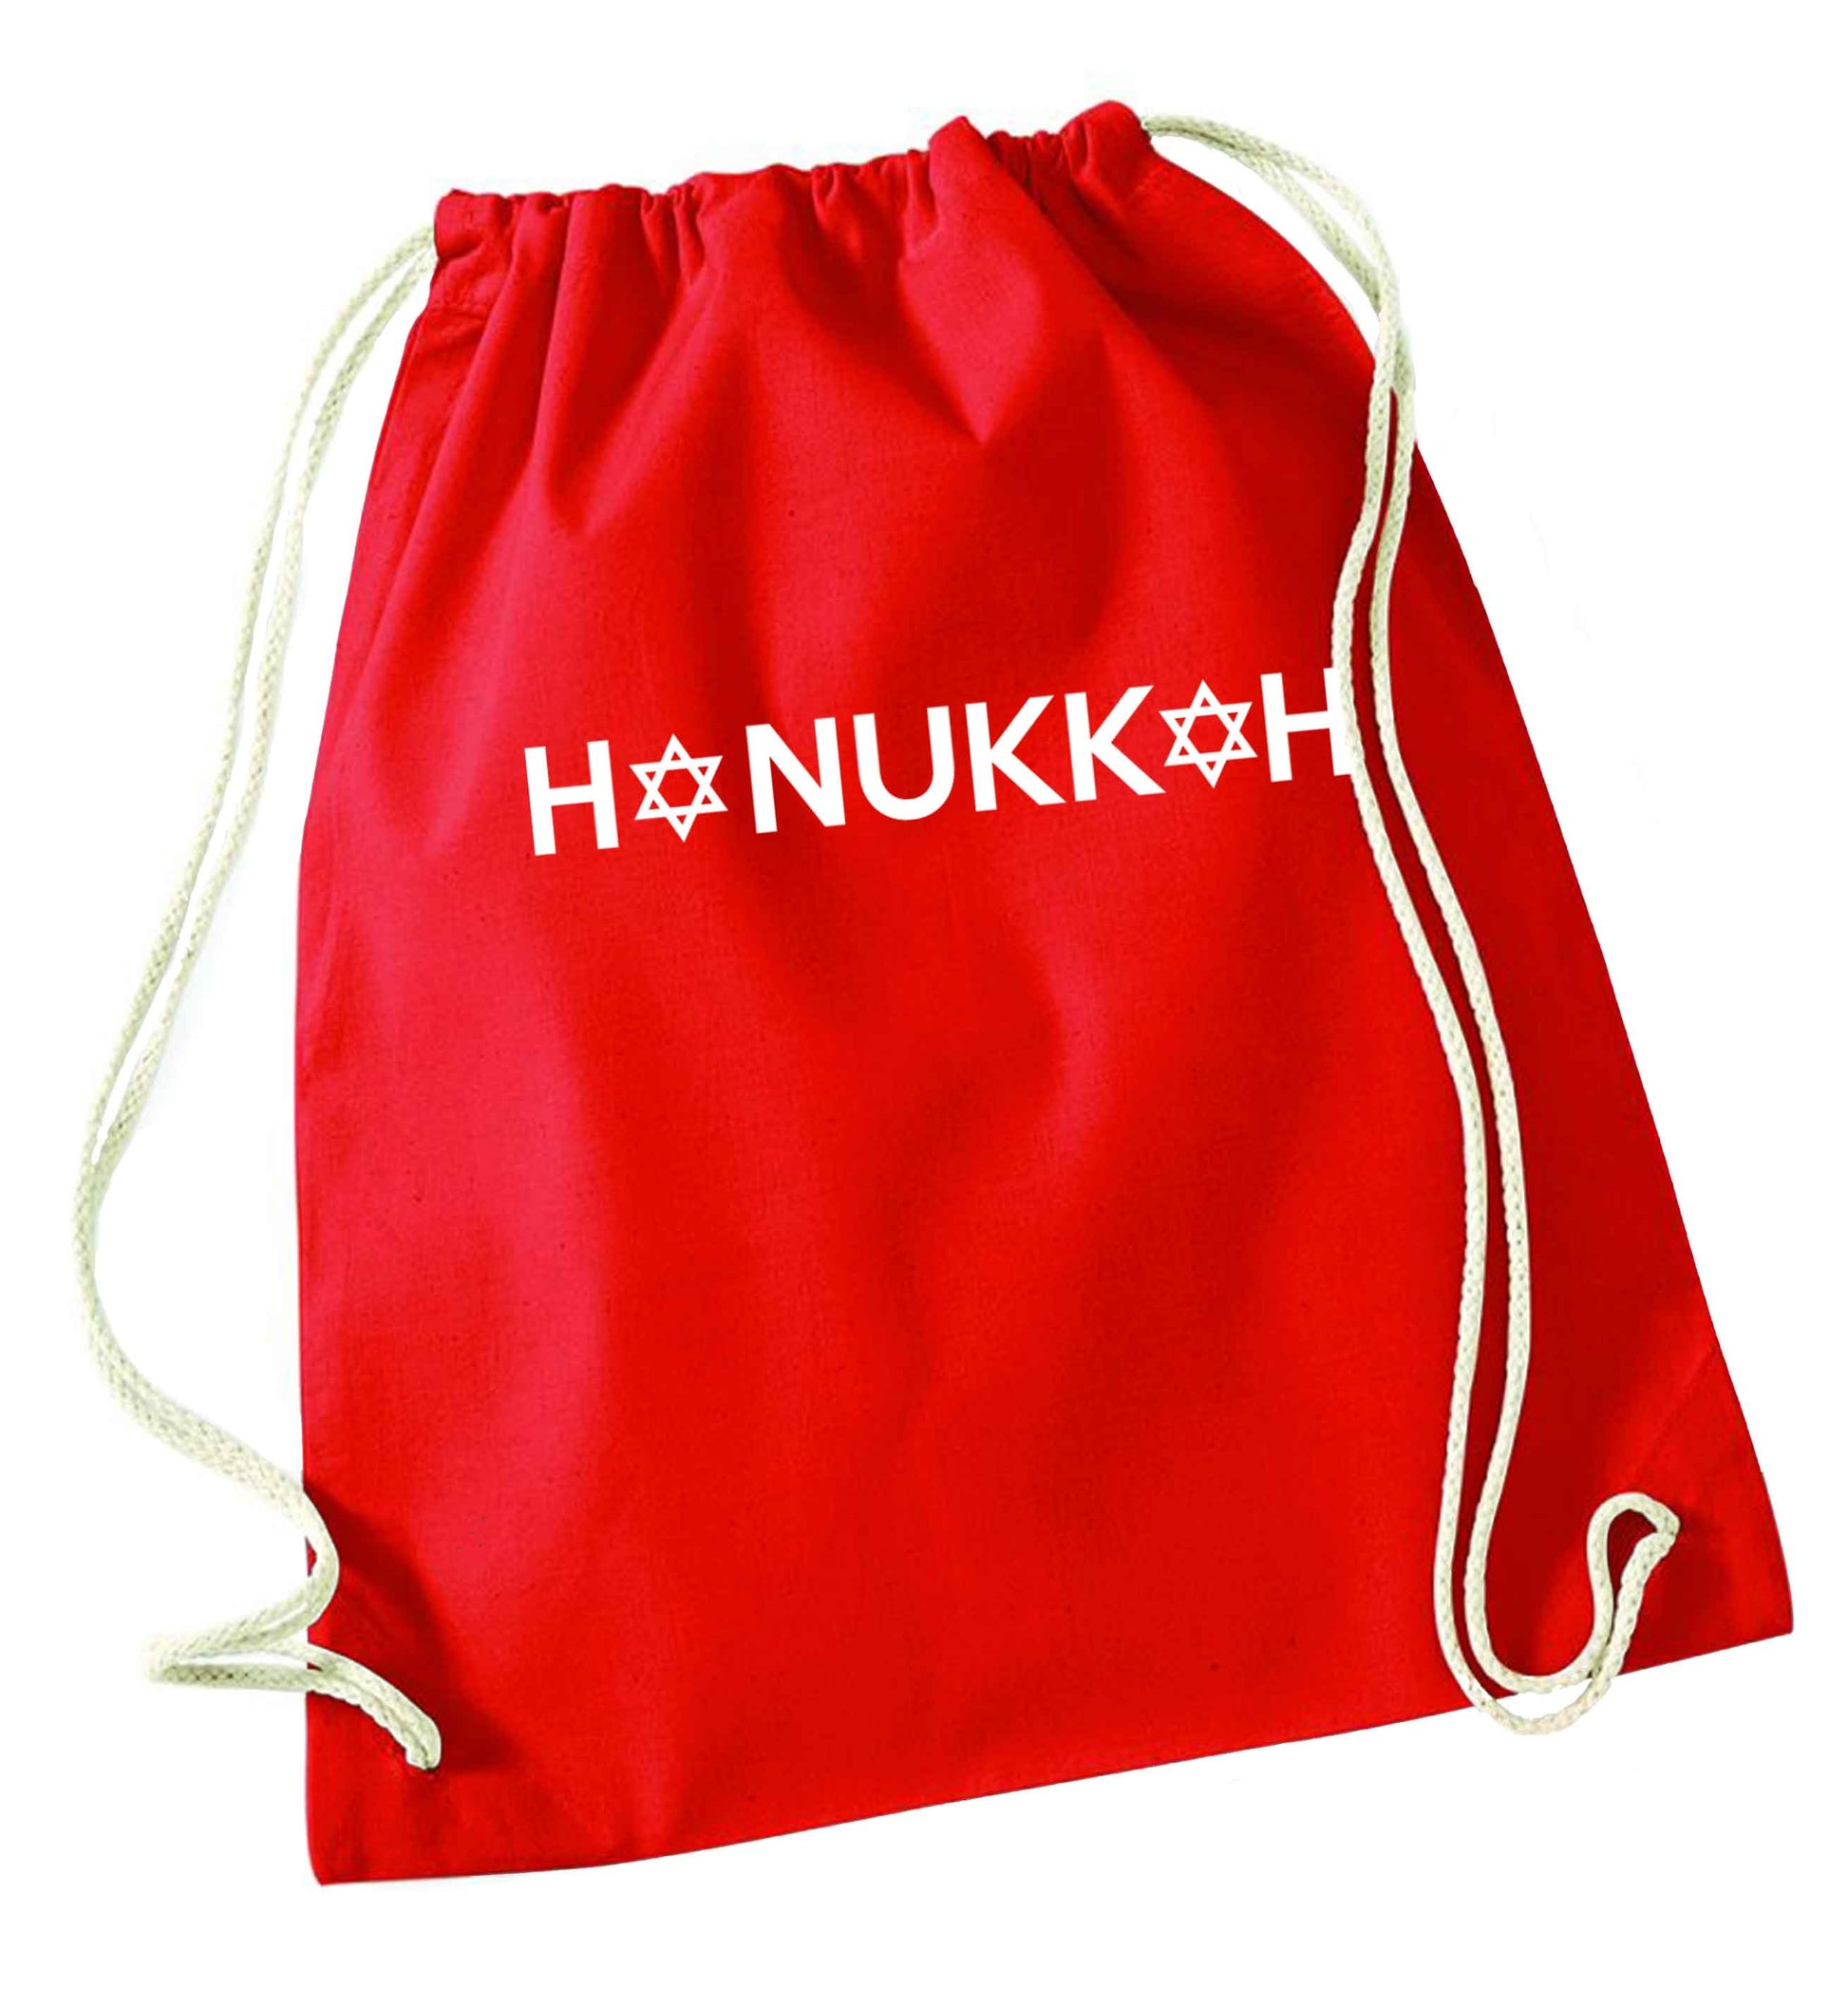 Hanukkah star of david red drawstring bag 